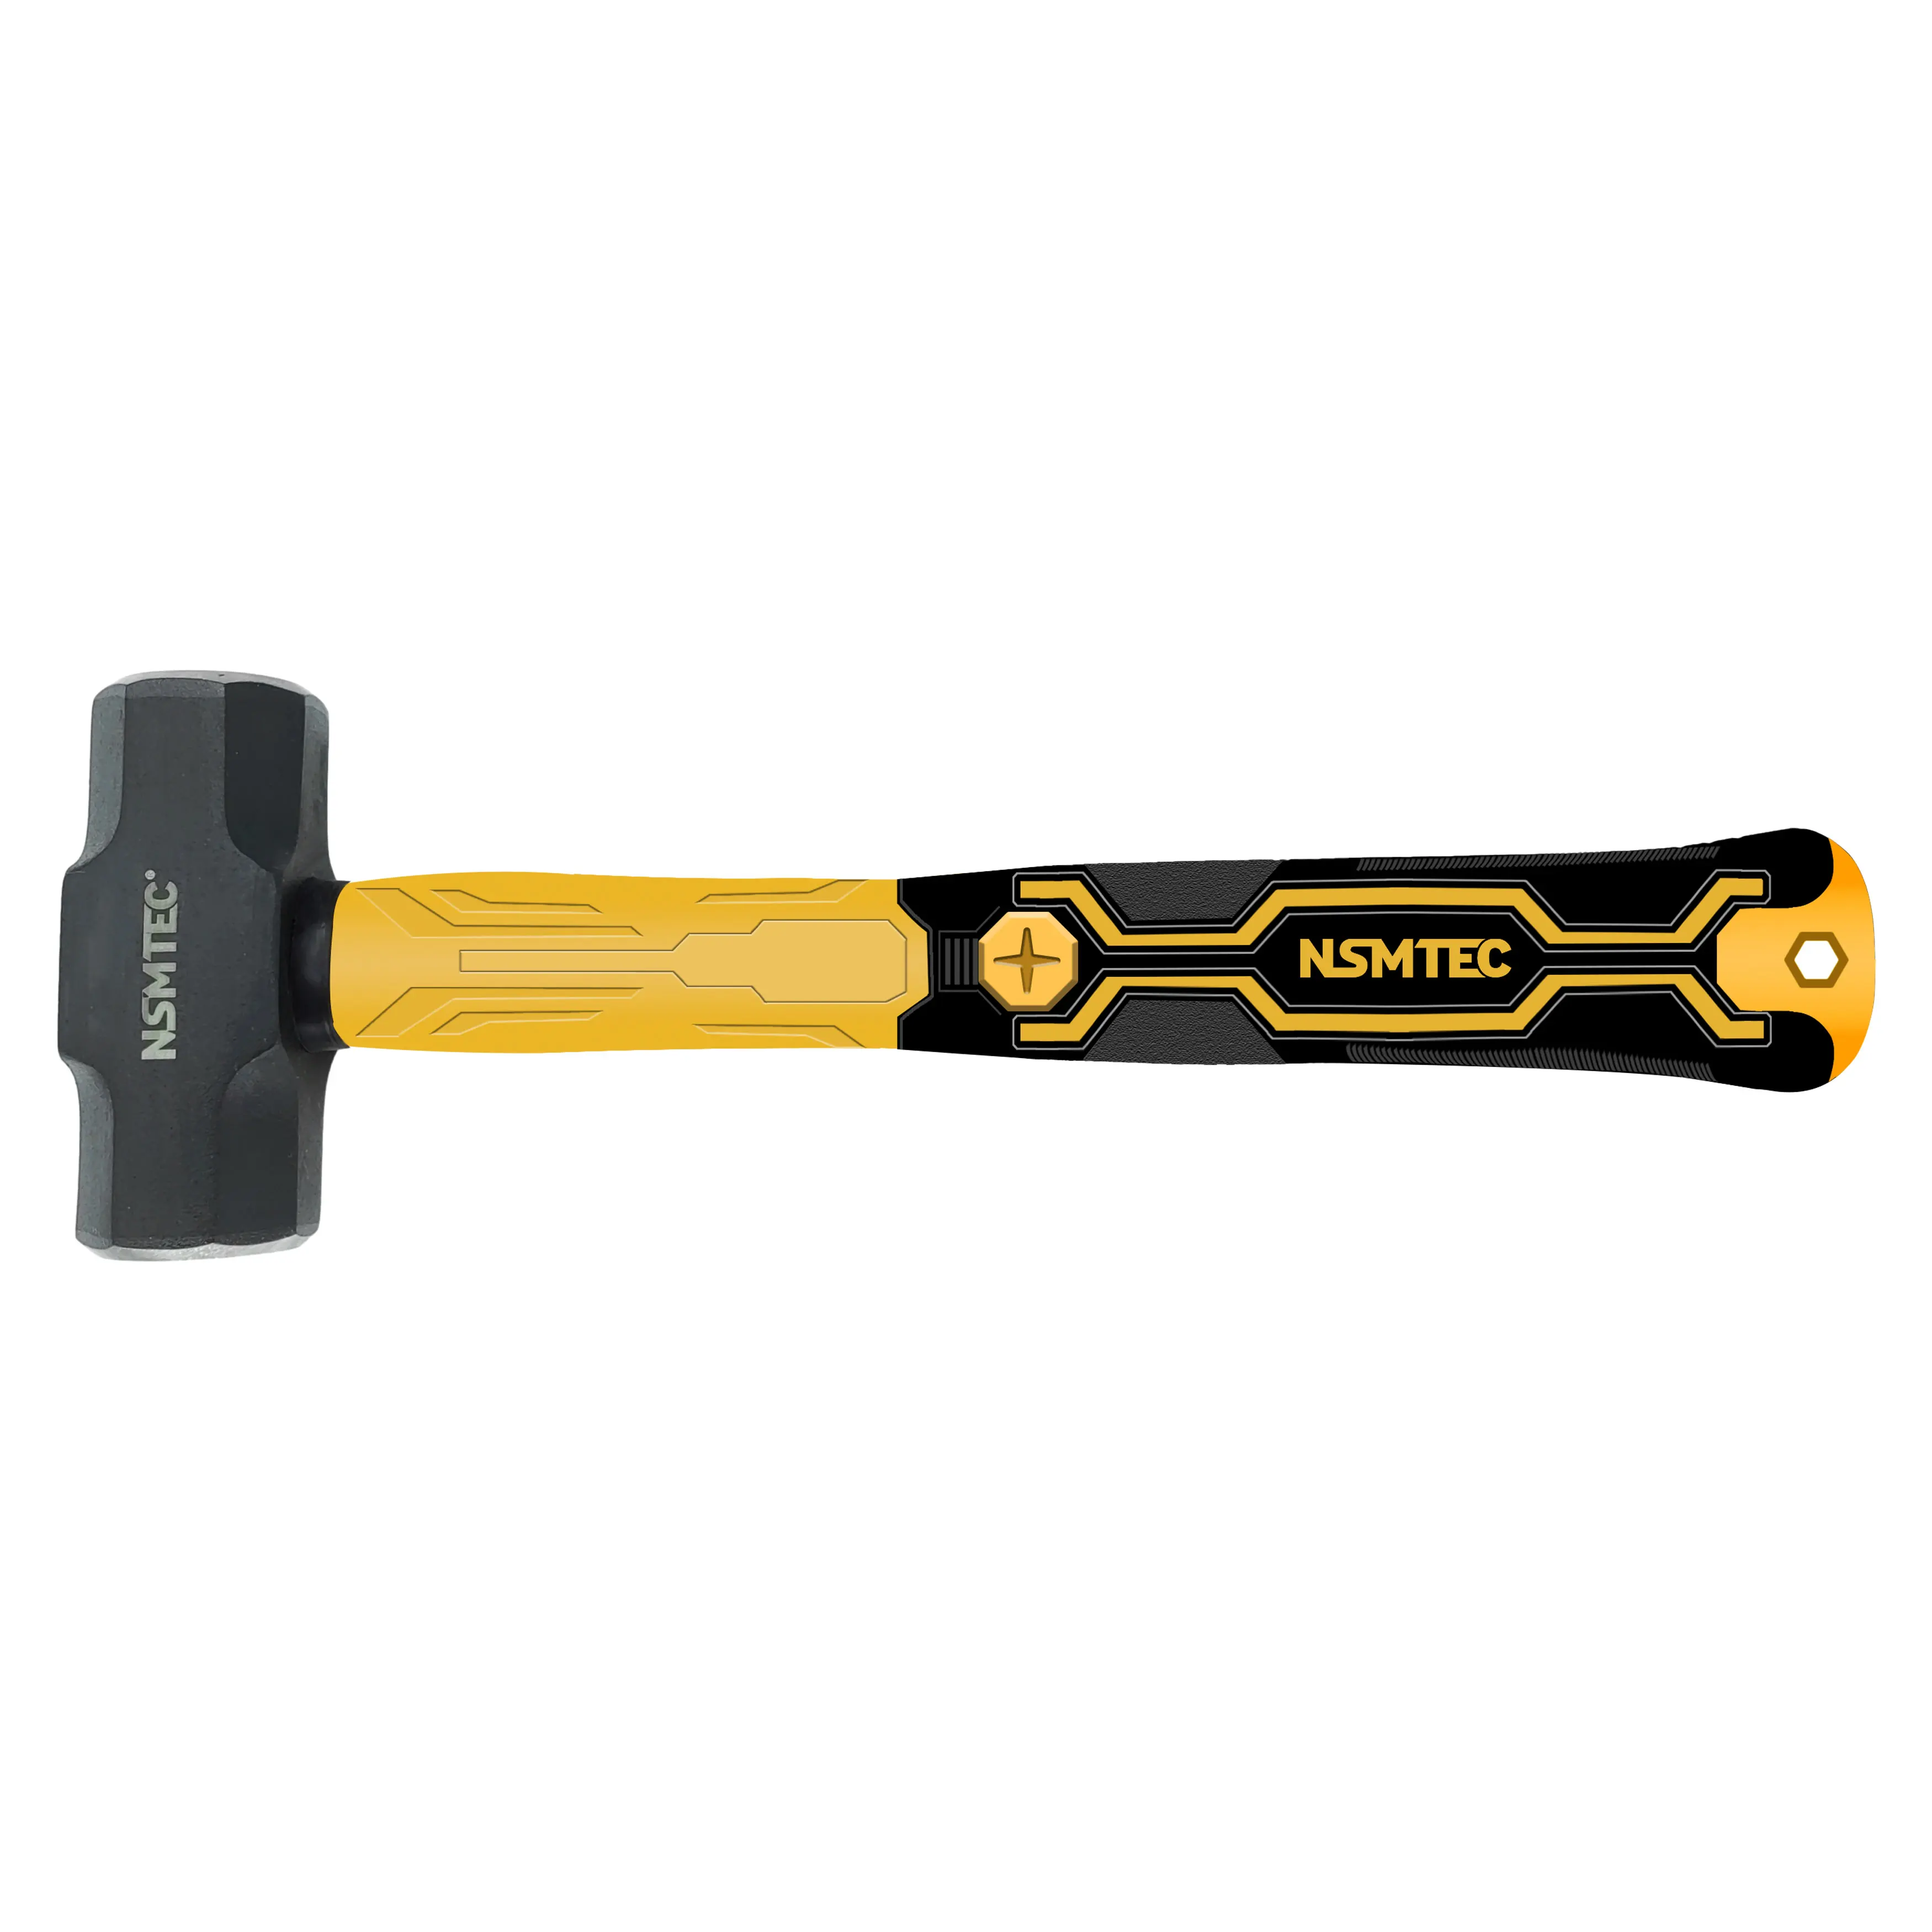 Pp + Tpr Handle Drilling Crack Sledge Hammer - Buy Pp + Tpr Handle Drilling  Crack Sledge Hammer Product on Alibaba.com